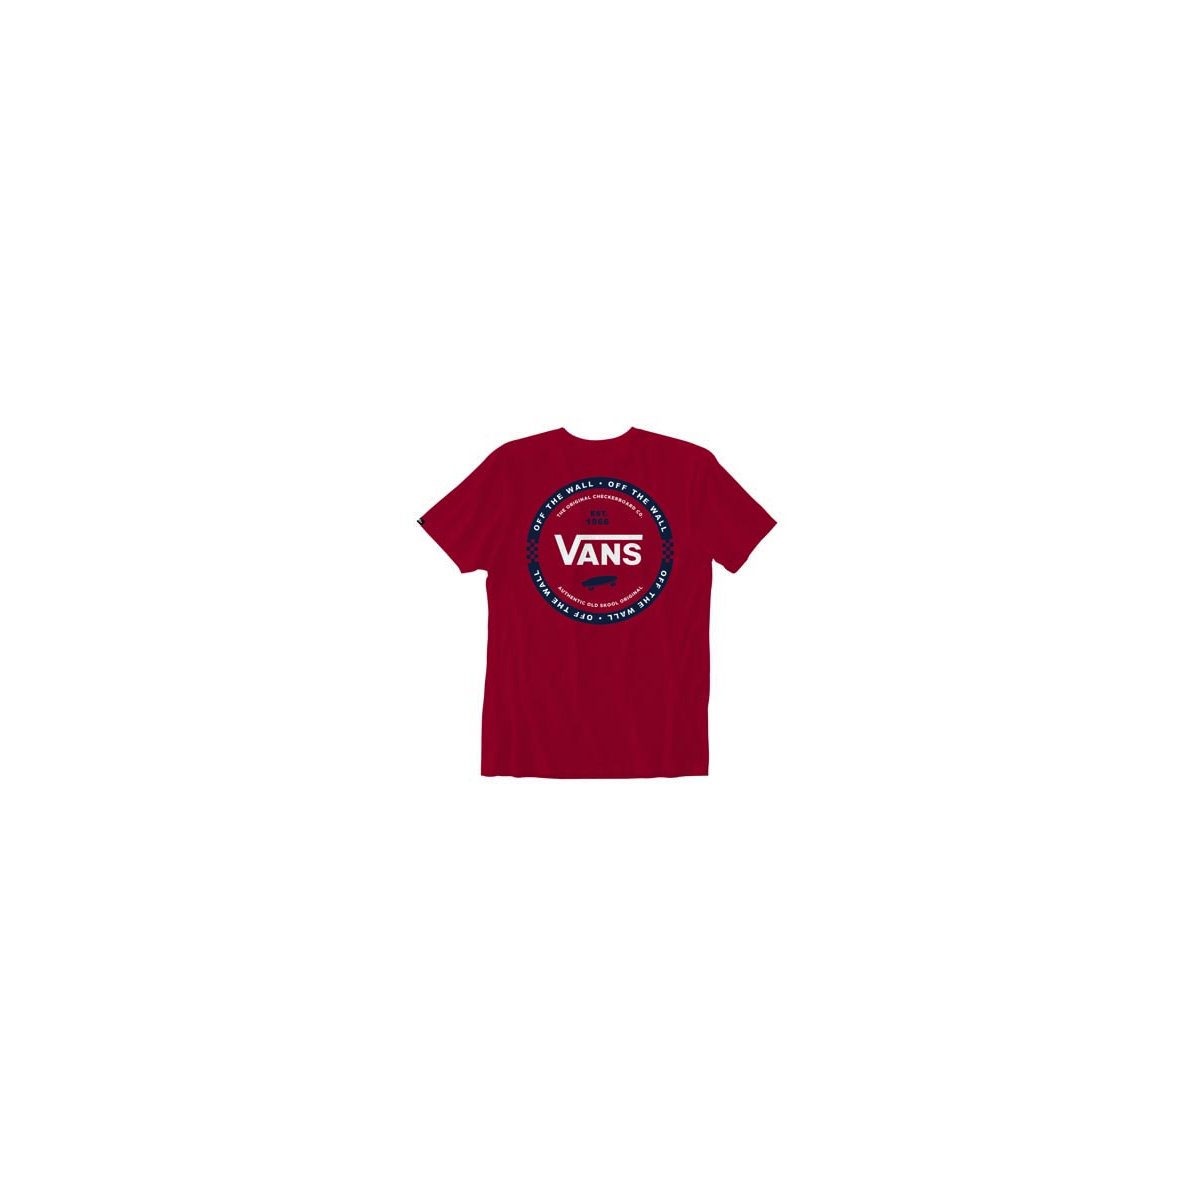 21,95 Check Vans Kids SantoLoco, € Logo T-Shirt -